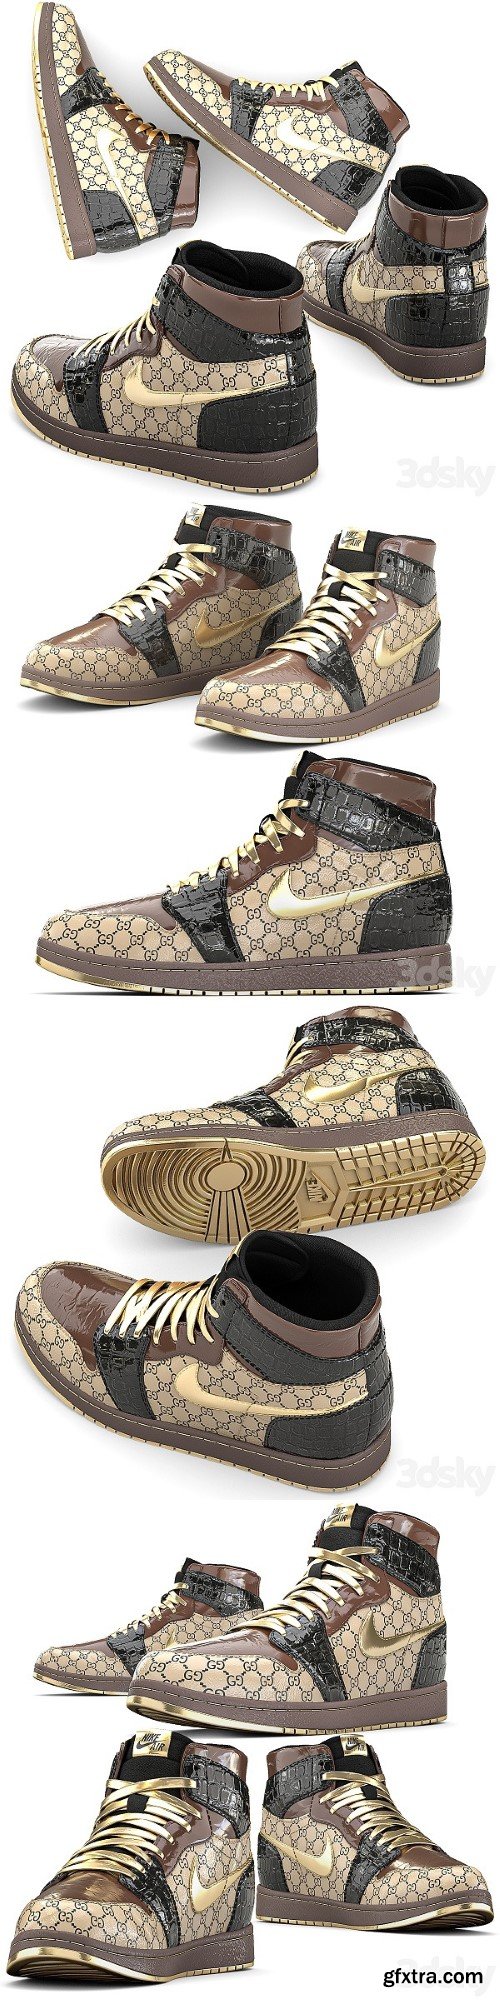 Pro 3DSky - Sneakers Nike Gucci